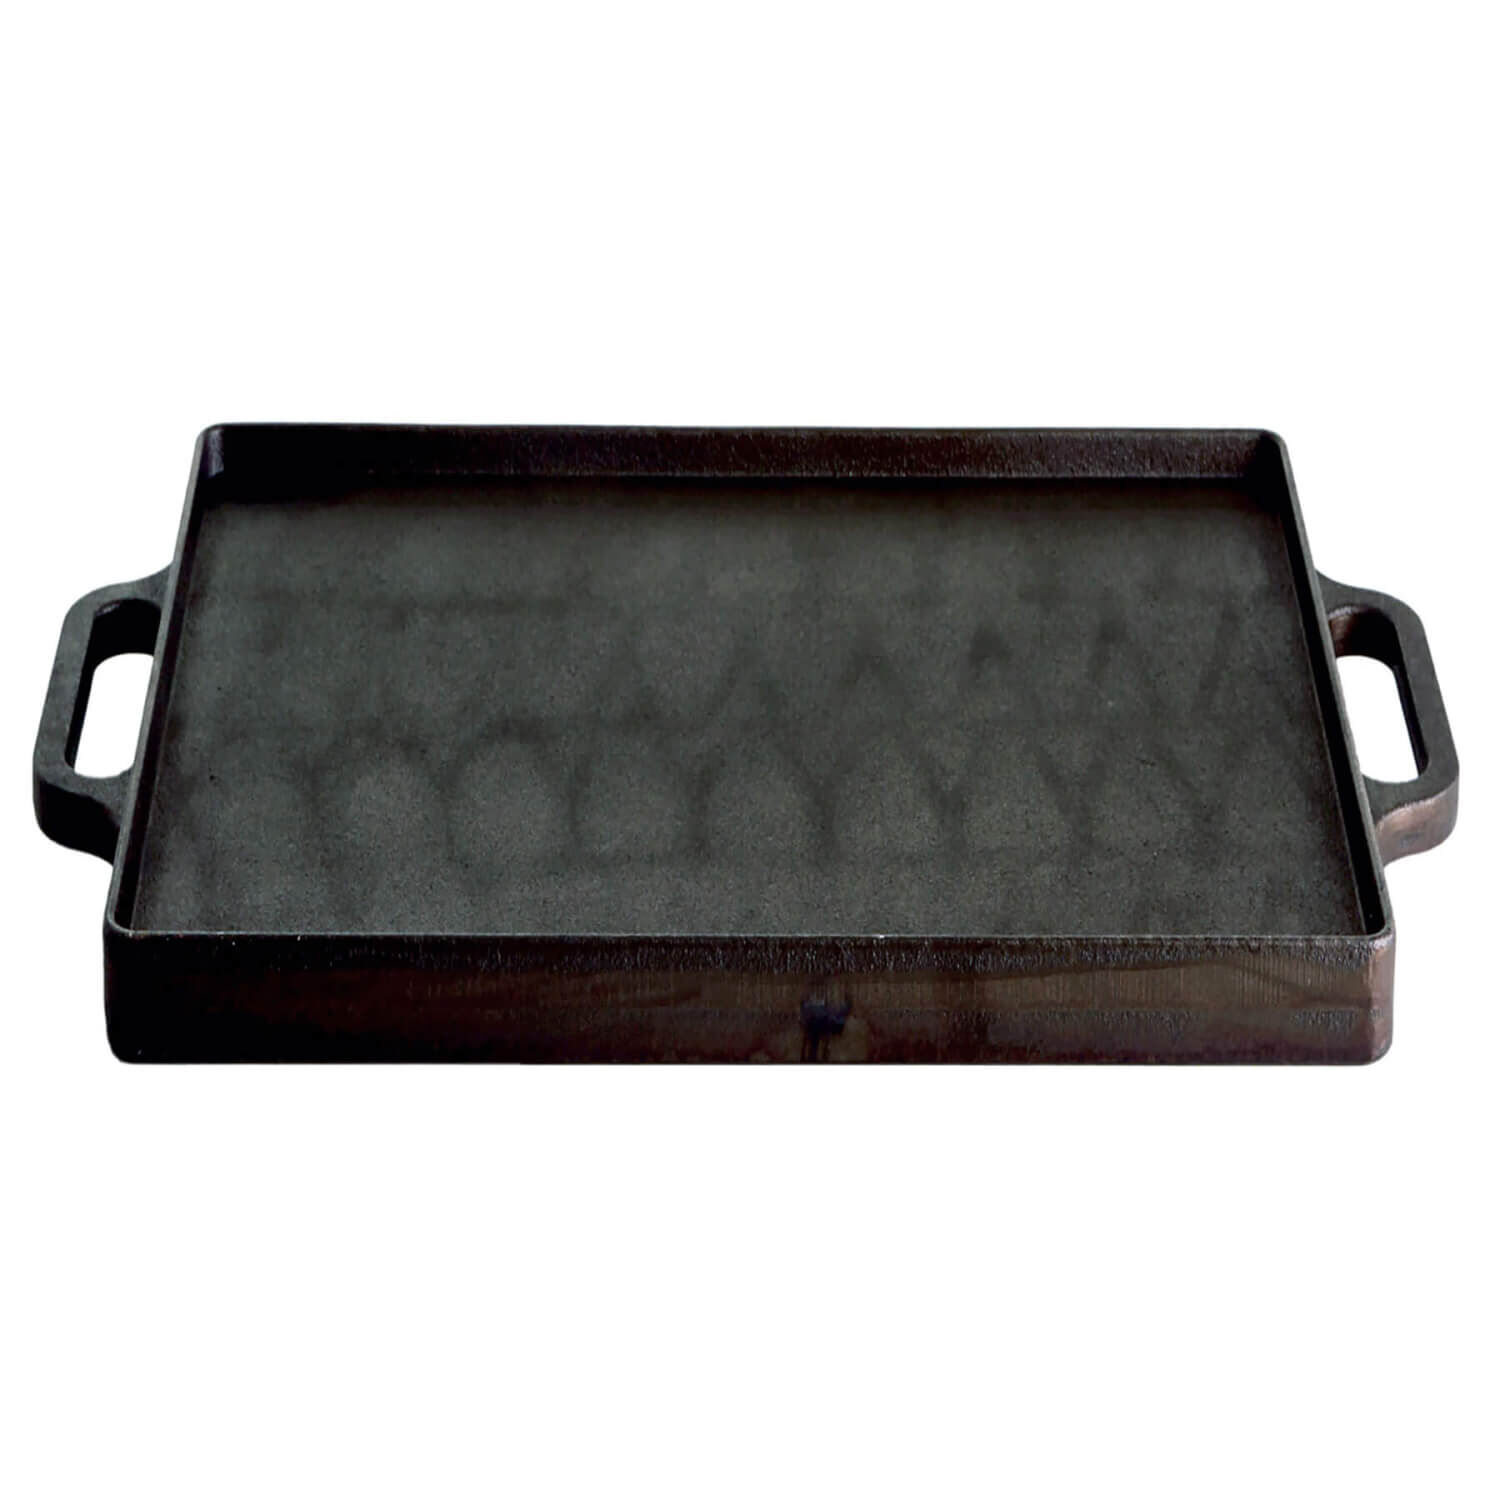 Paella World Grillplatte (Plancha) aus Gusseisen, 38 x 38 cm 3838